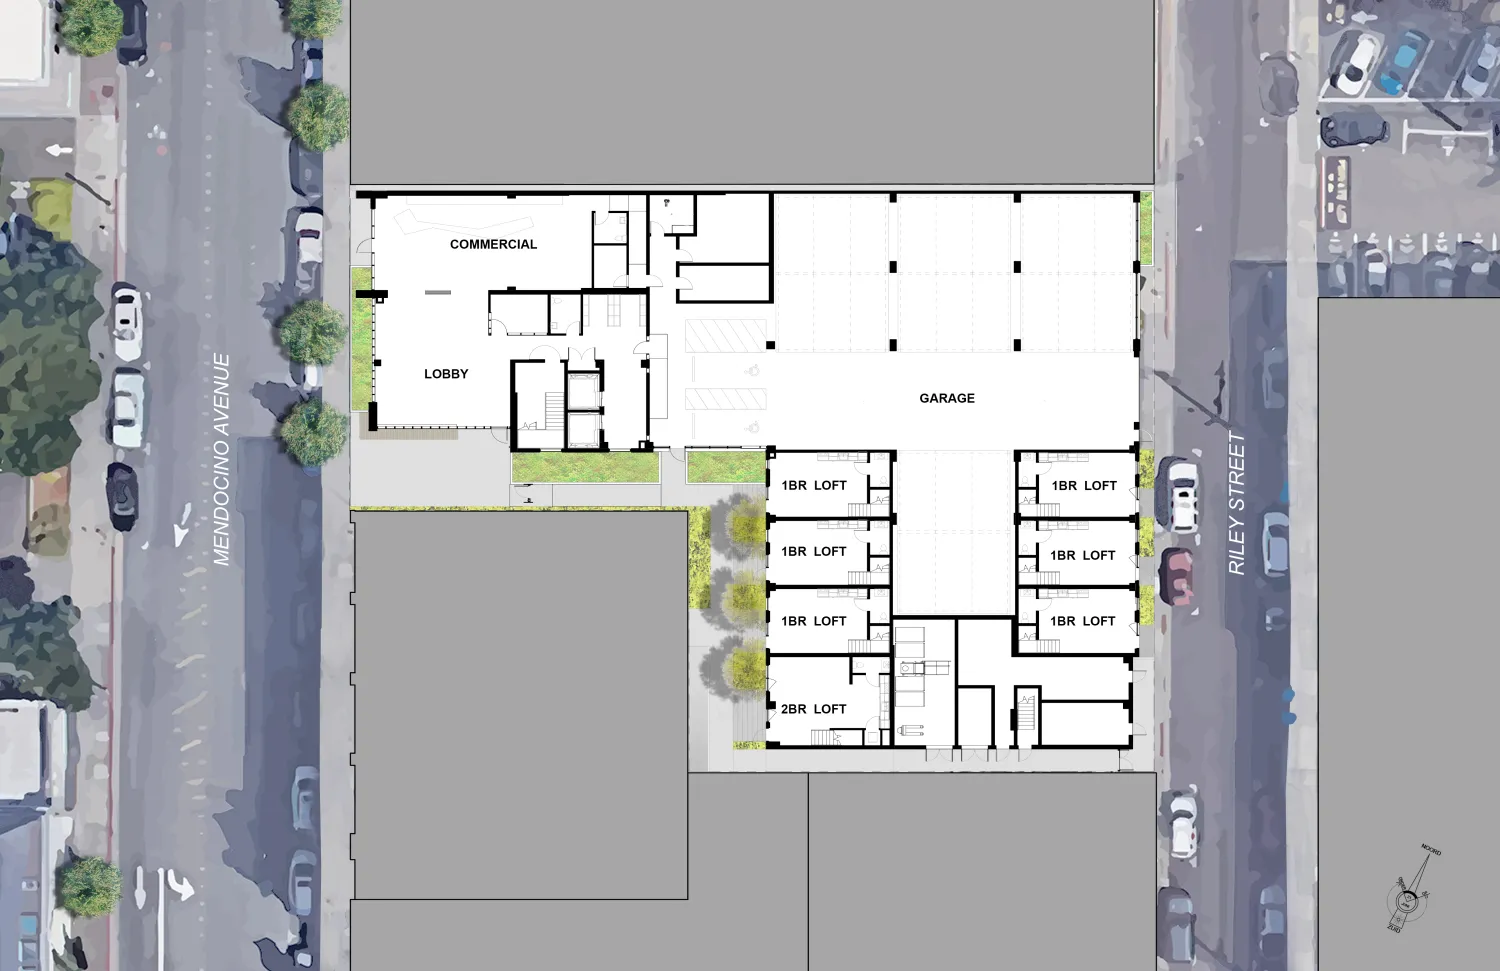 Ground level site plan for 420 Mendocino in Santa Rosa, California.